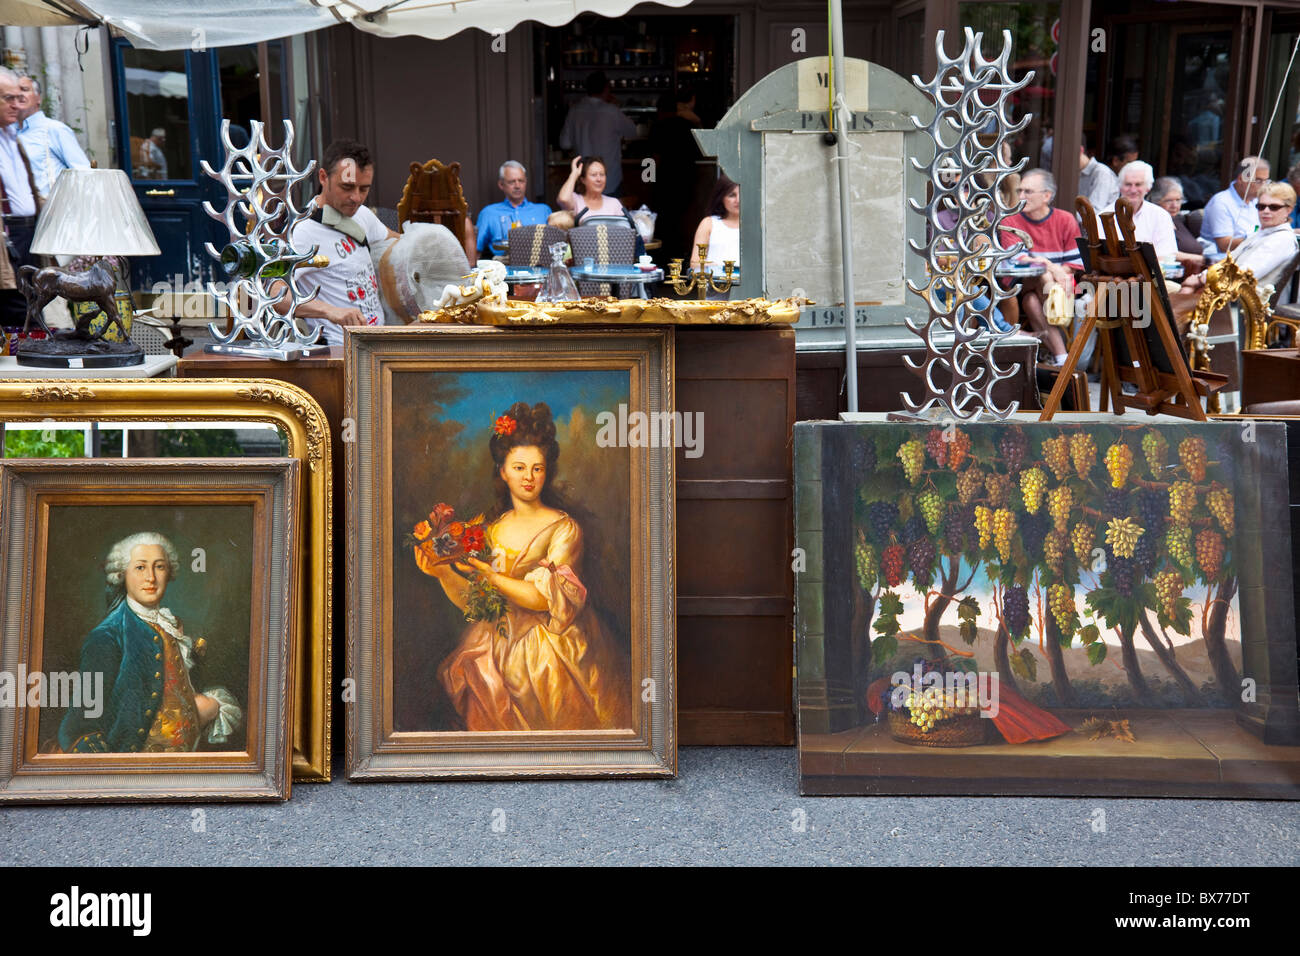 Flea market, rue Mouffetard, Paris, France, Europe Stock Photo